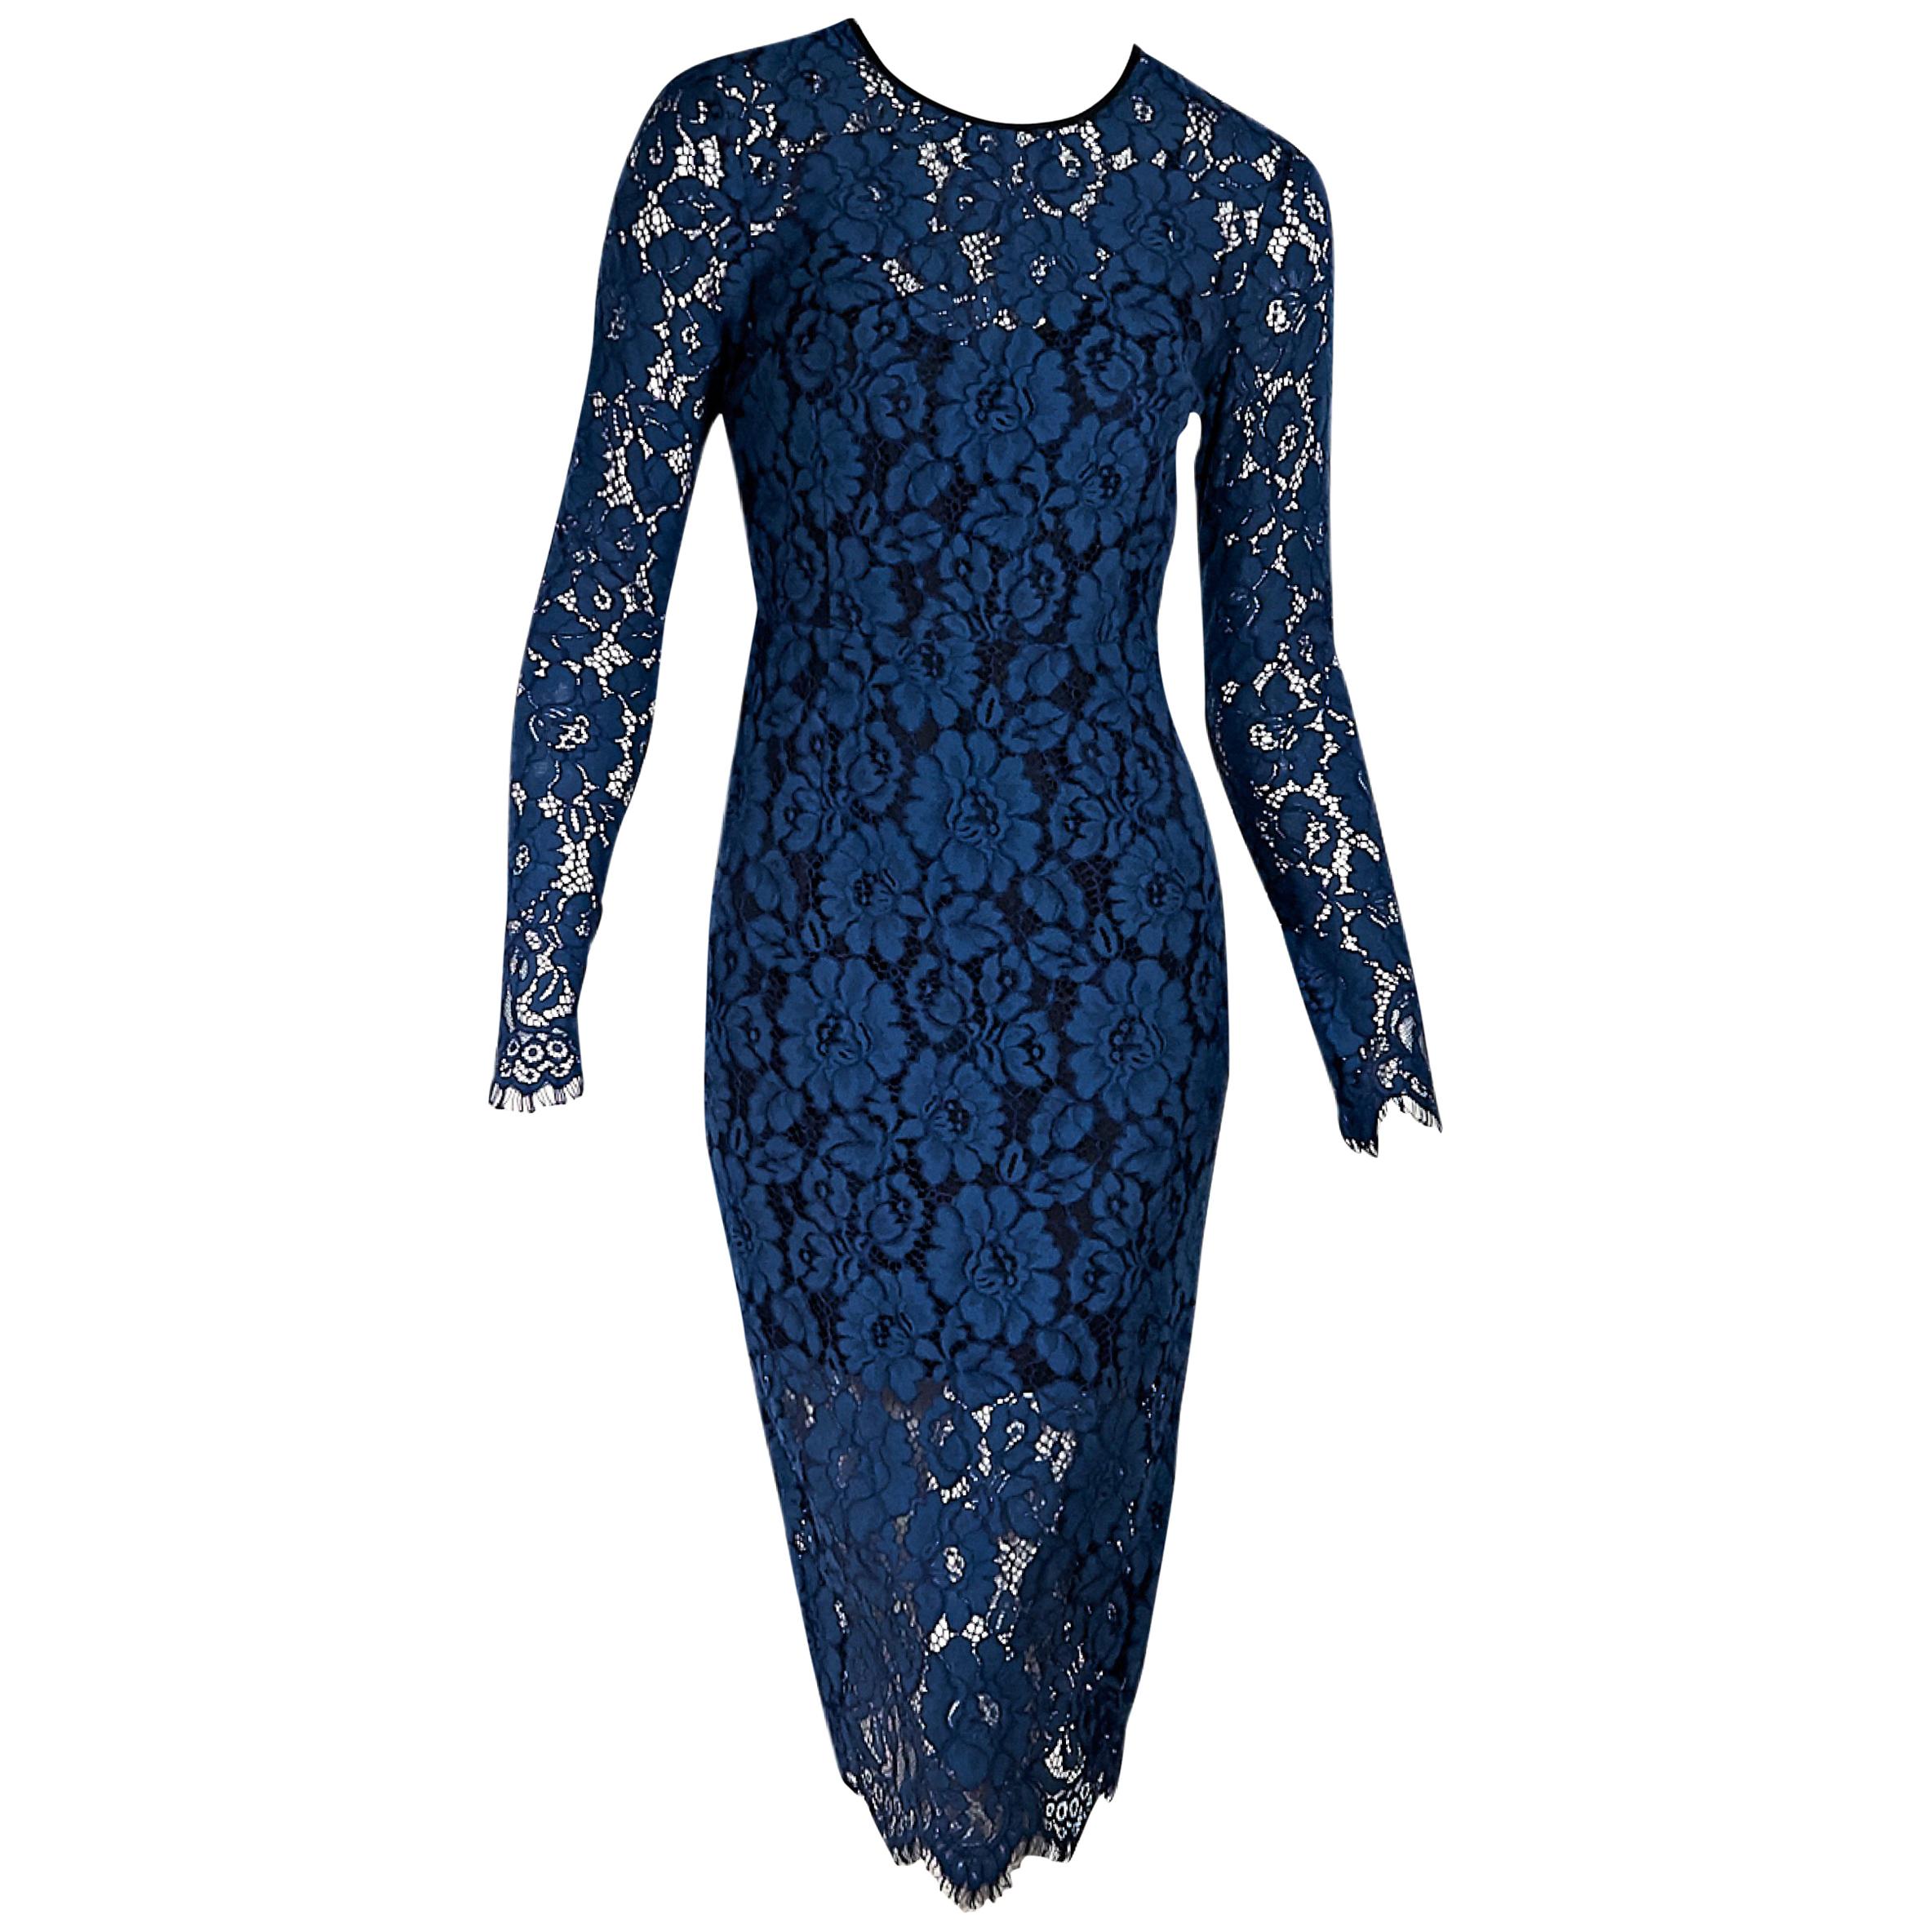 Blue Veronica Beard Long-Sleeve Lace Dress